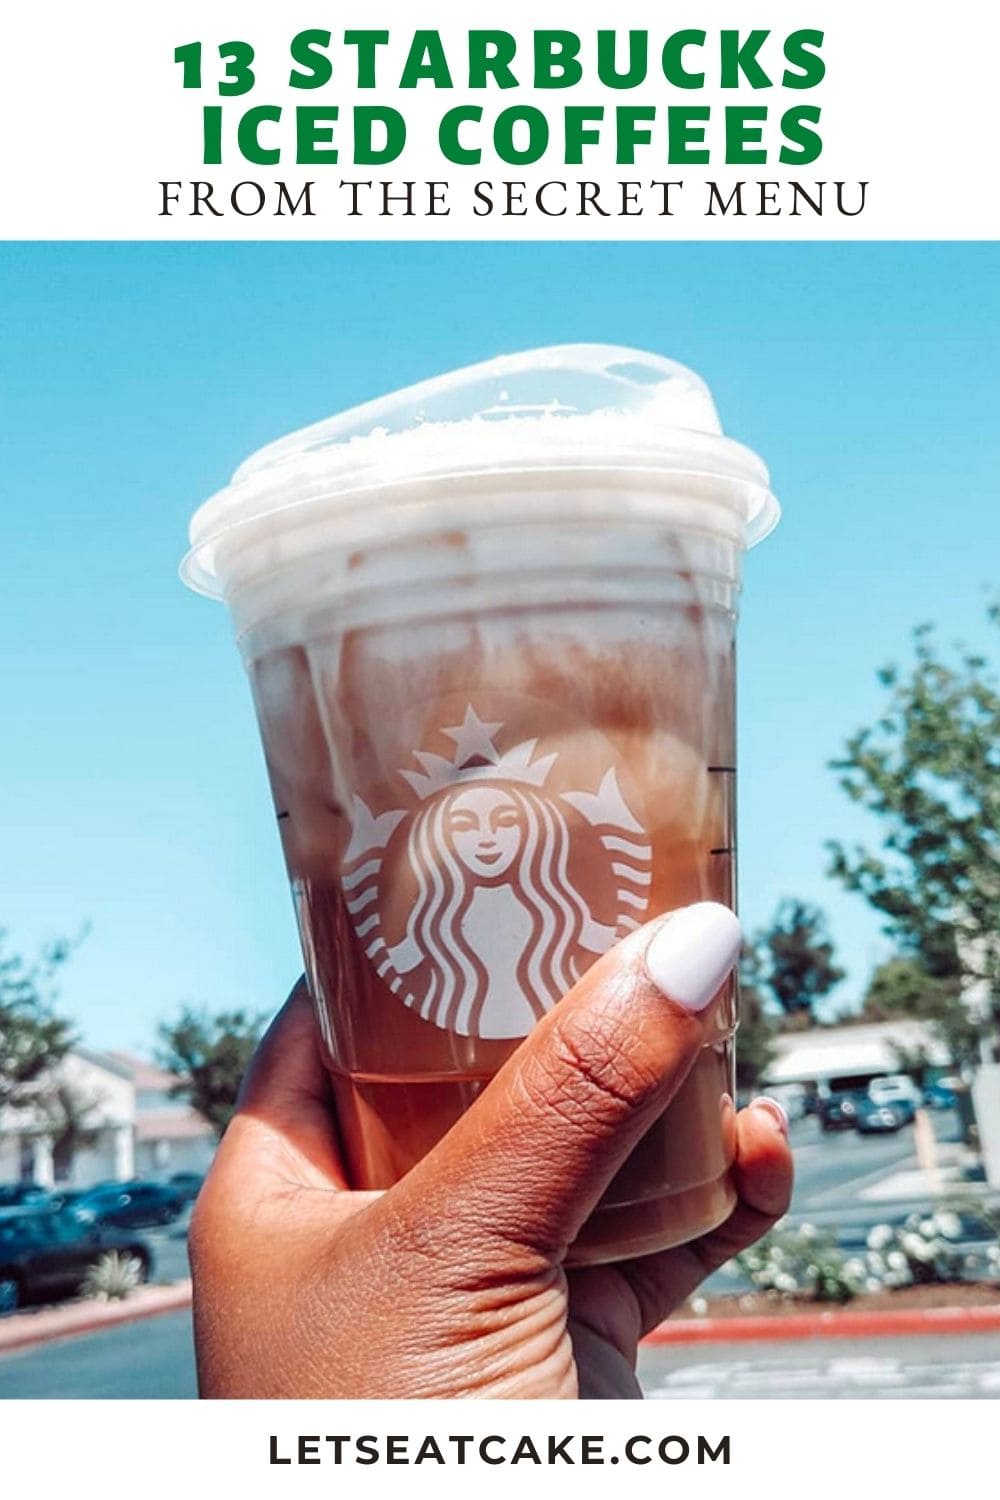 13 Starbucks Secret Menu Iced Coffee Drinks to Try Next